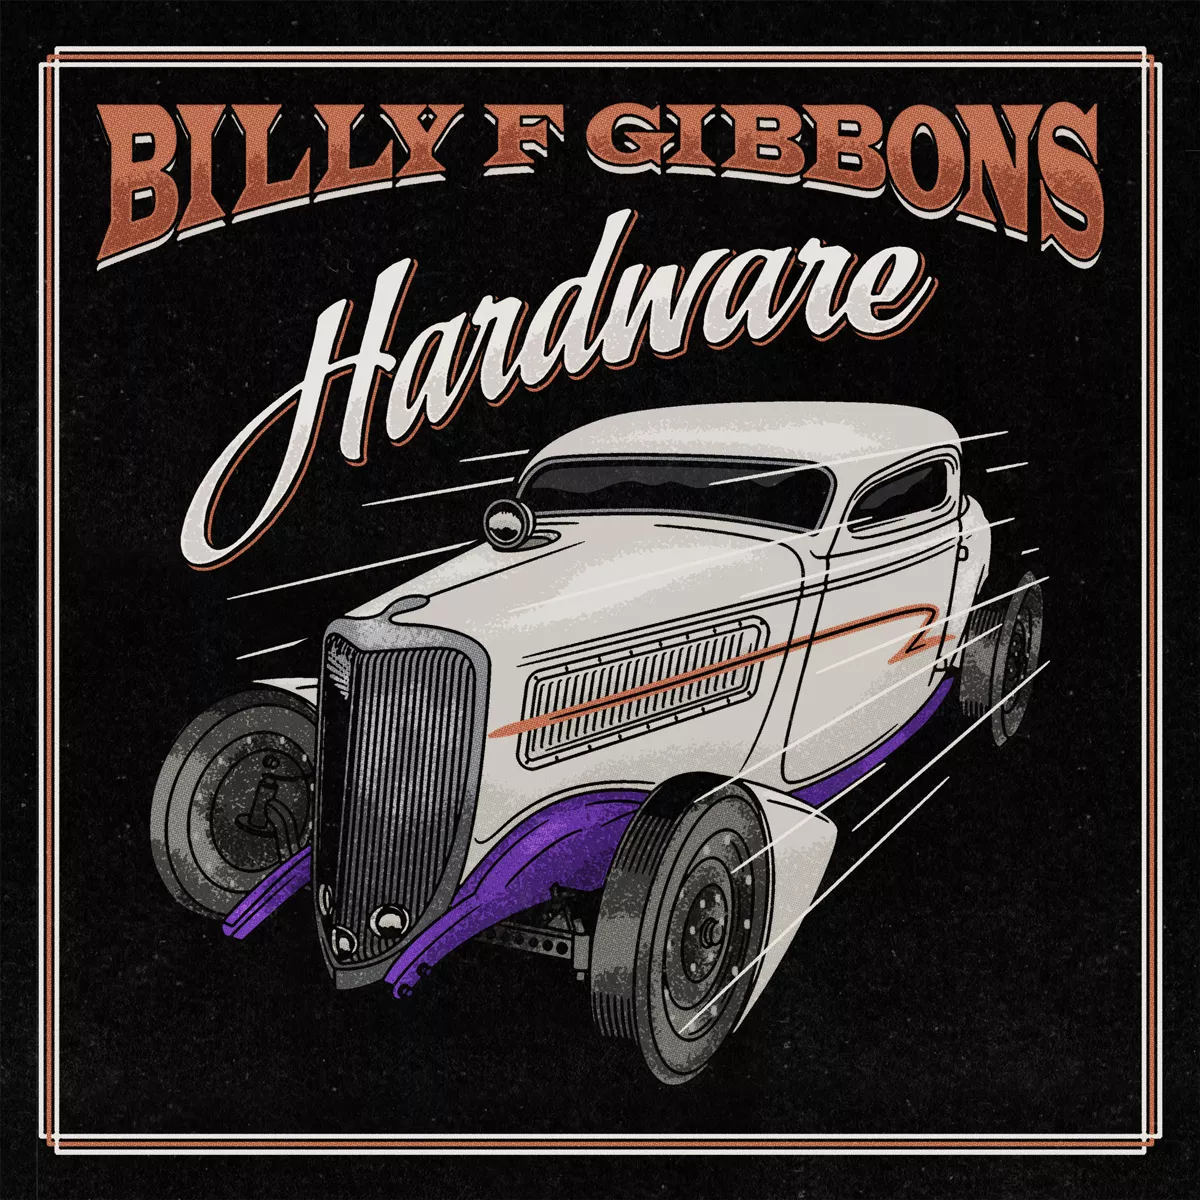 Hardware - Billy F. Gibbons